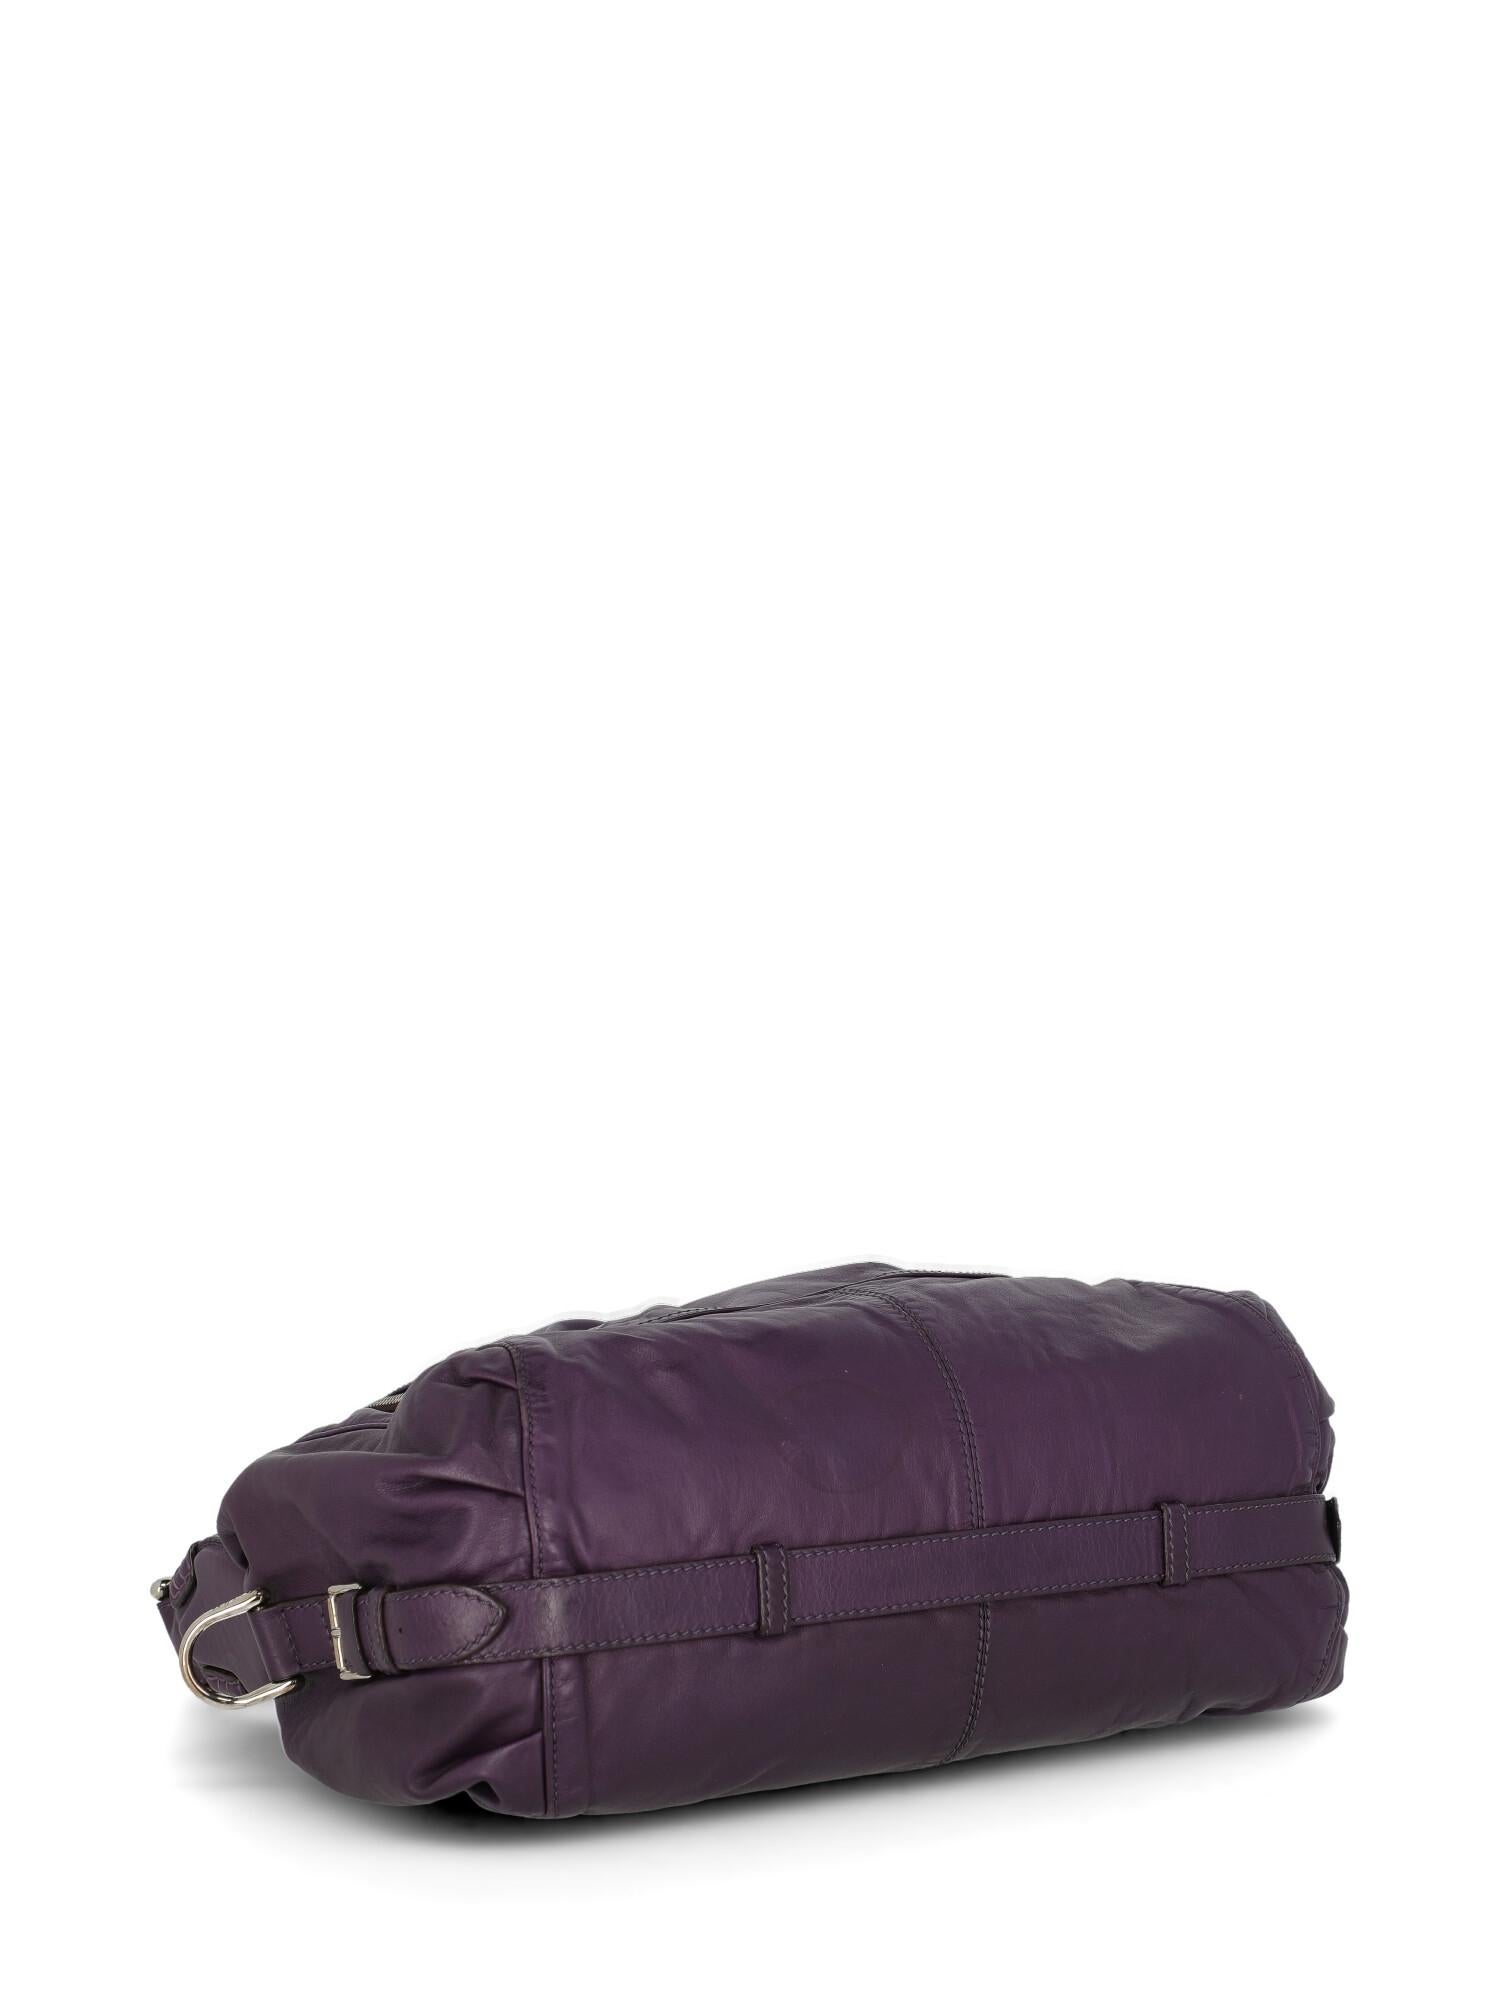 Women's Tod'S Woman Shoulder bag  Purple Leather For Sale